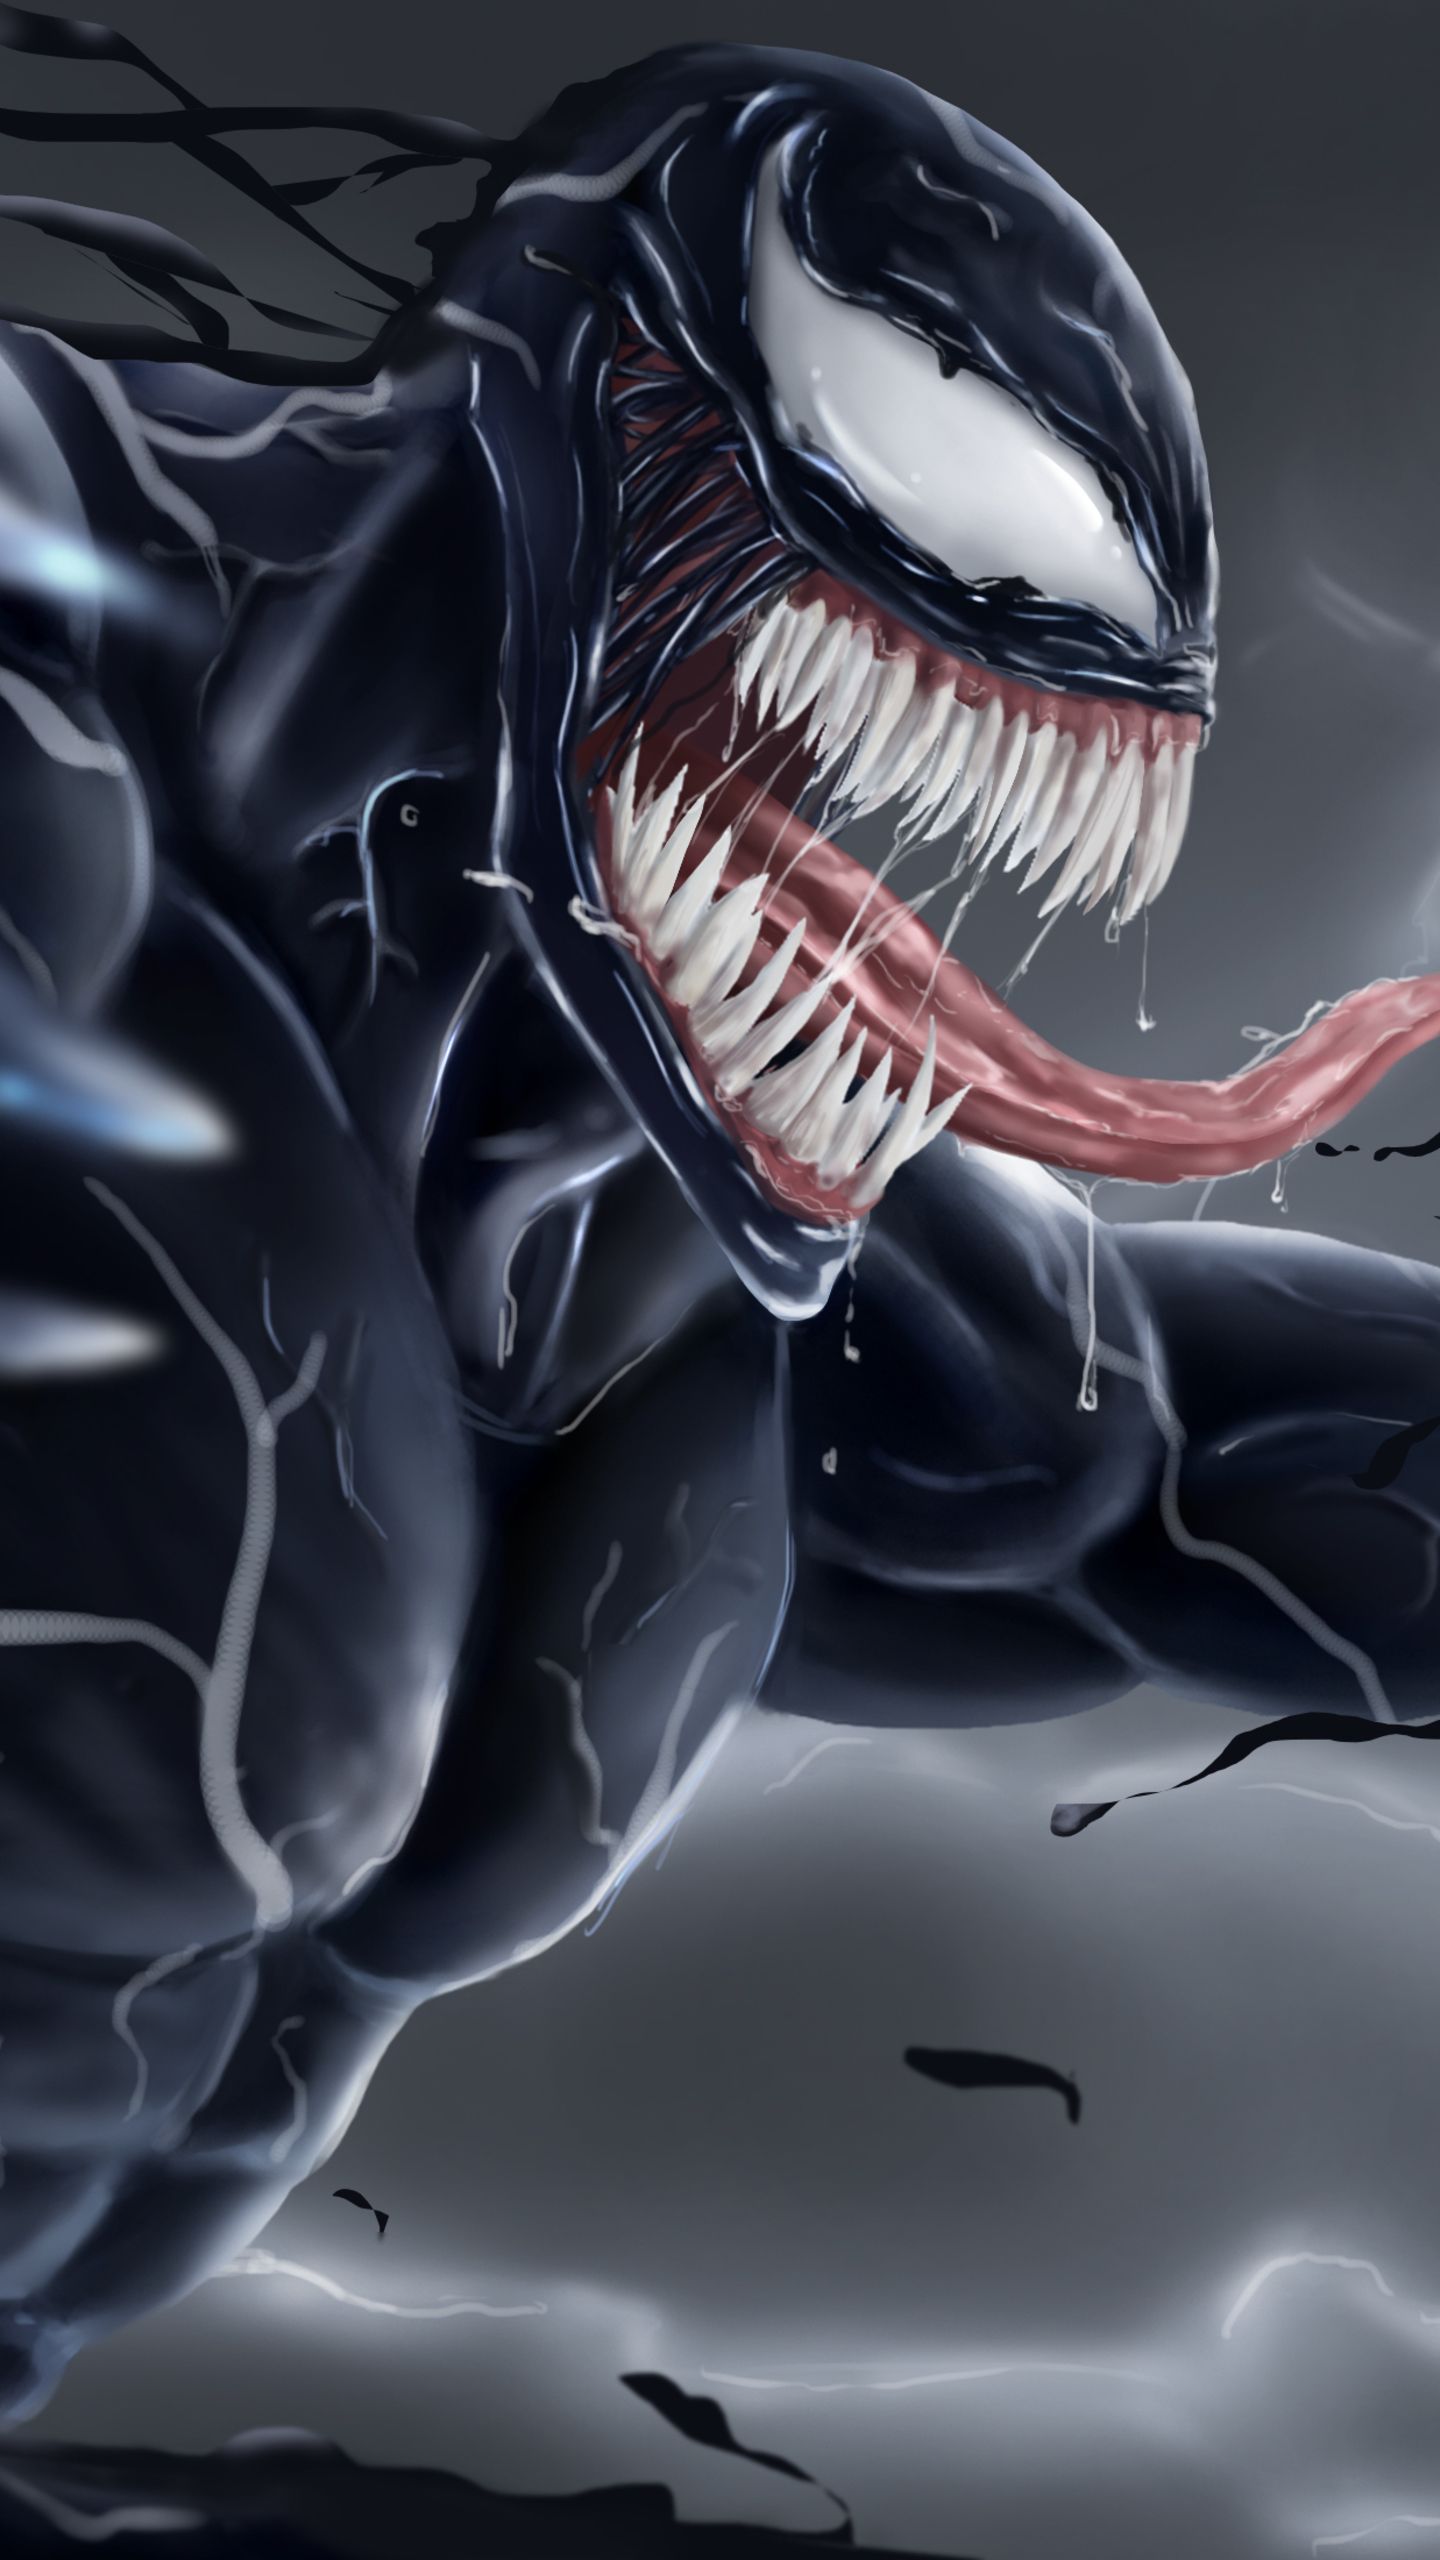 Venom Cartoon Wallpapers